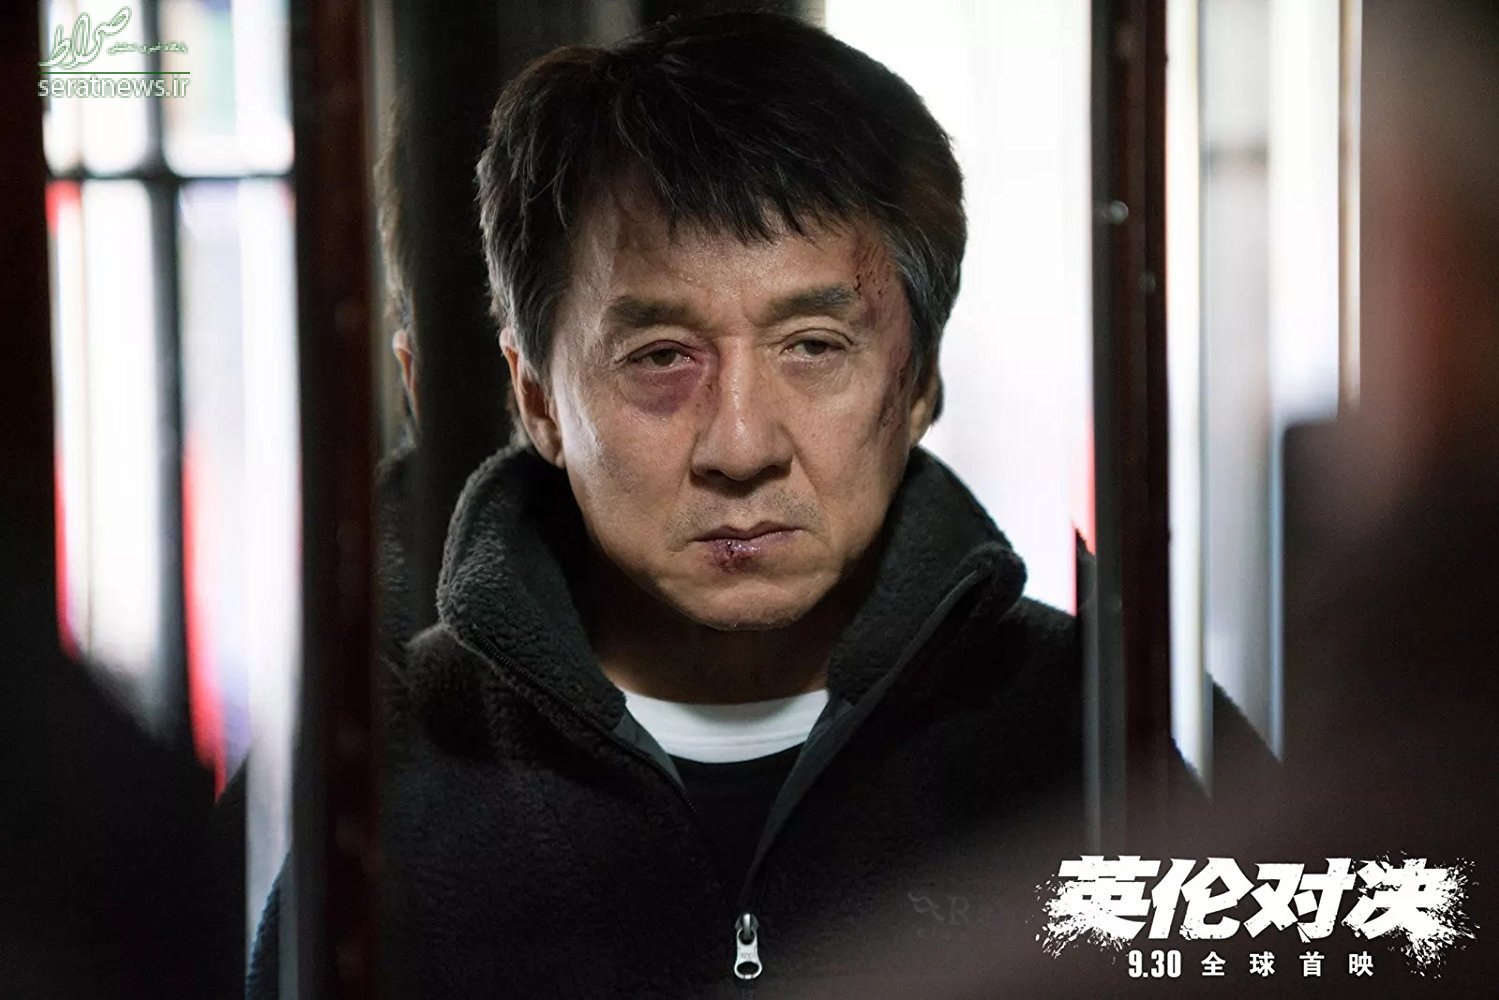 چهره جکی چان در سن 63 سالگی +عکس